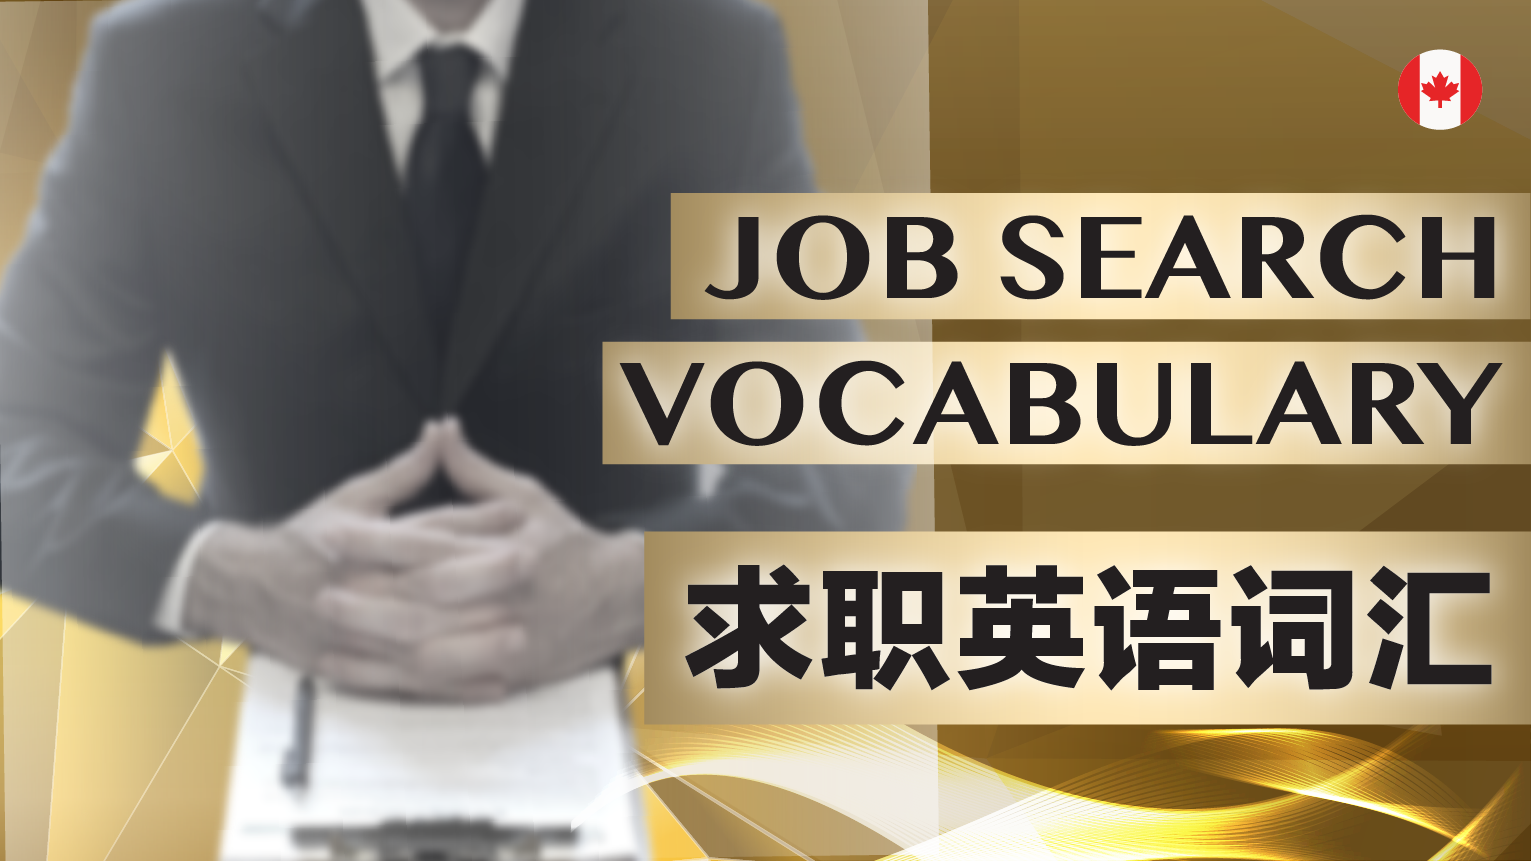 Job Search Vocabulary